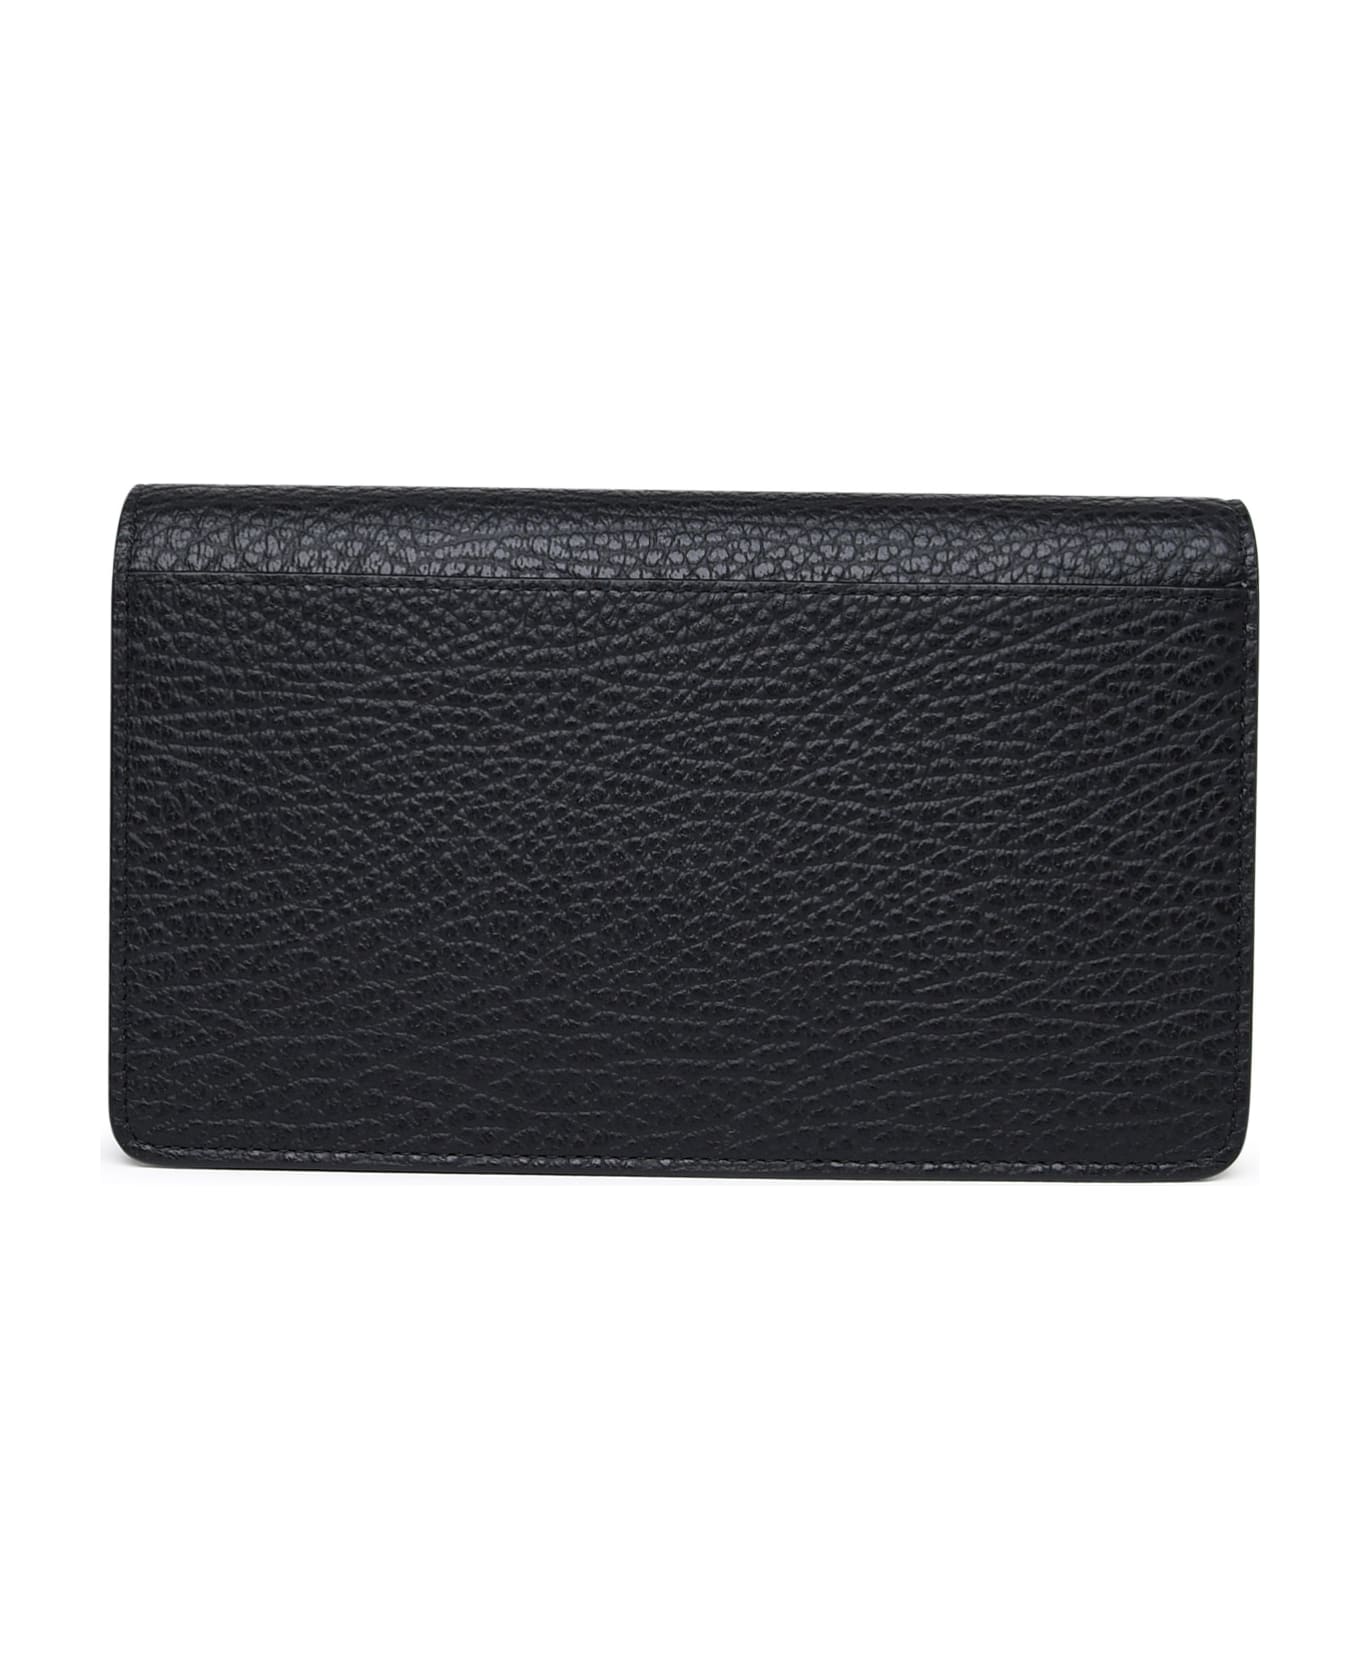 Maison Margiela Black Calf Leather Wallet - Black